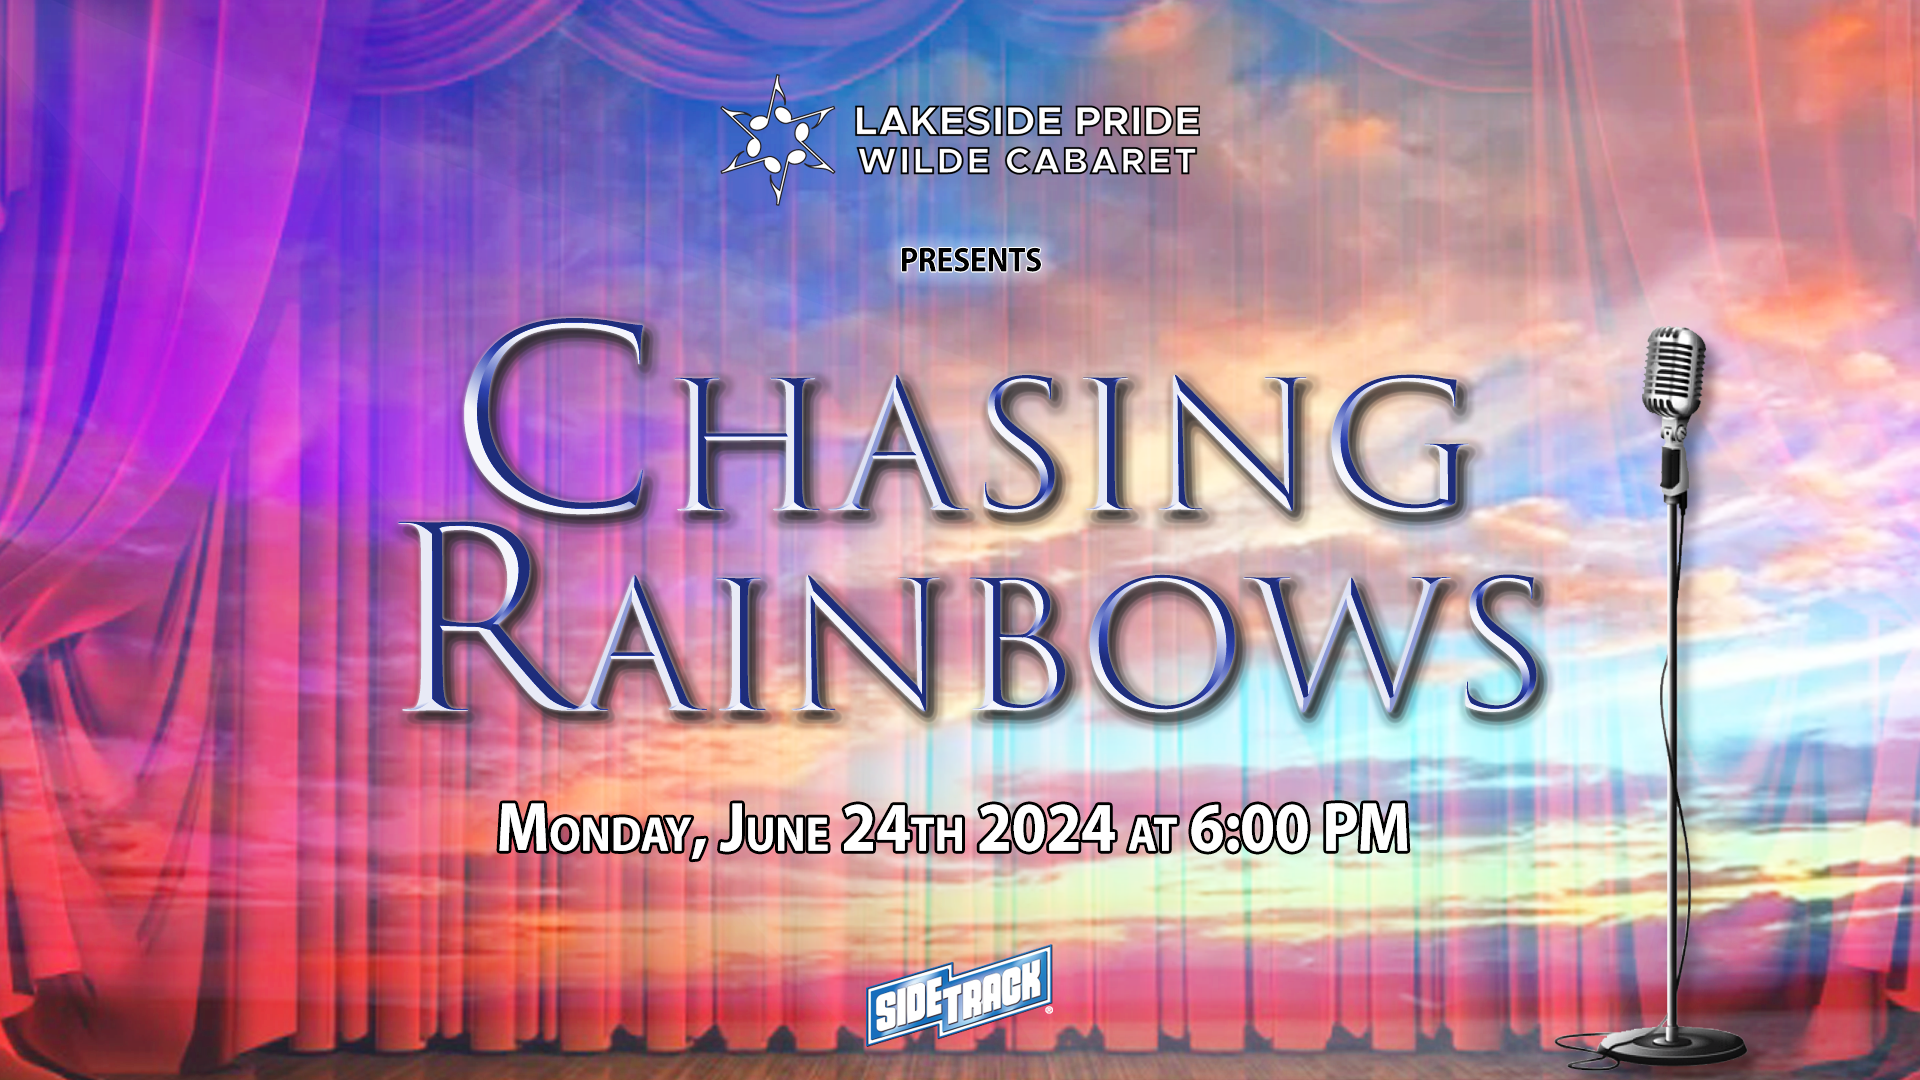 Lakeside Pride Wilde Cabaret's June Show: Chasing Rainbows